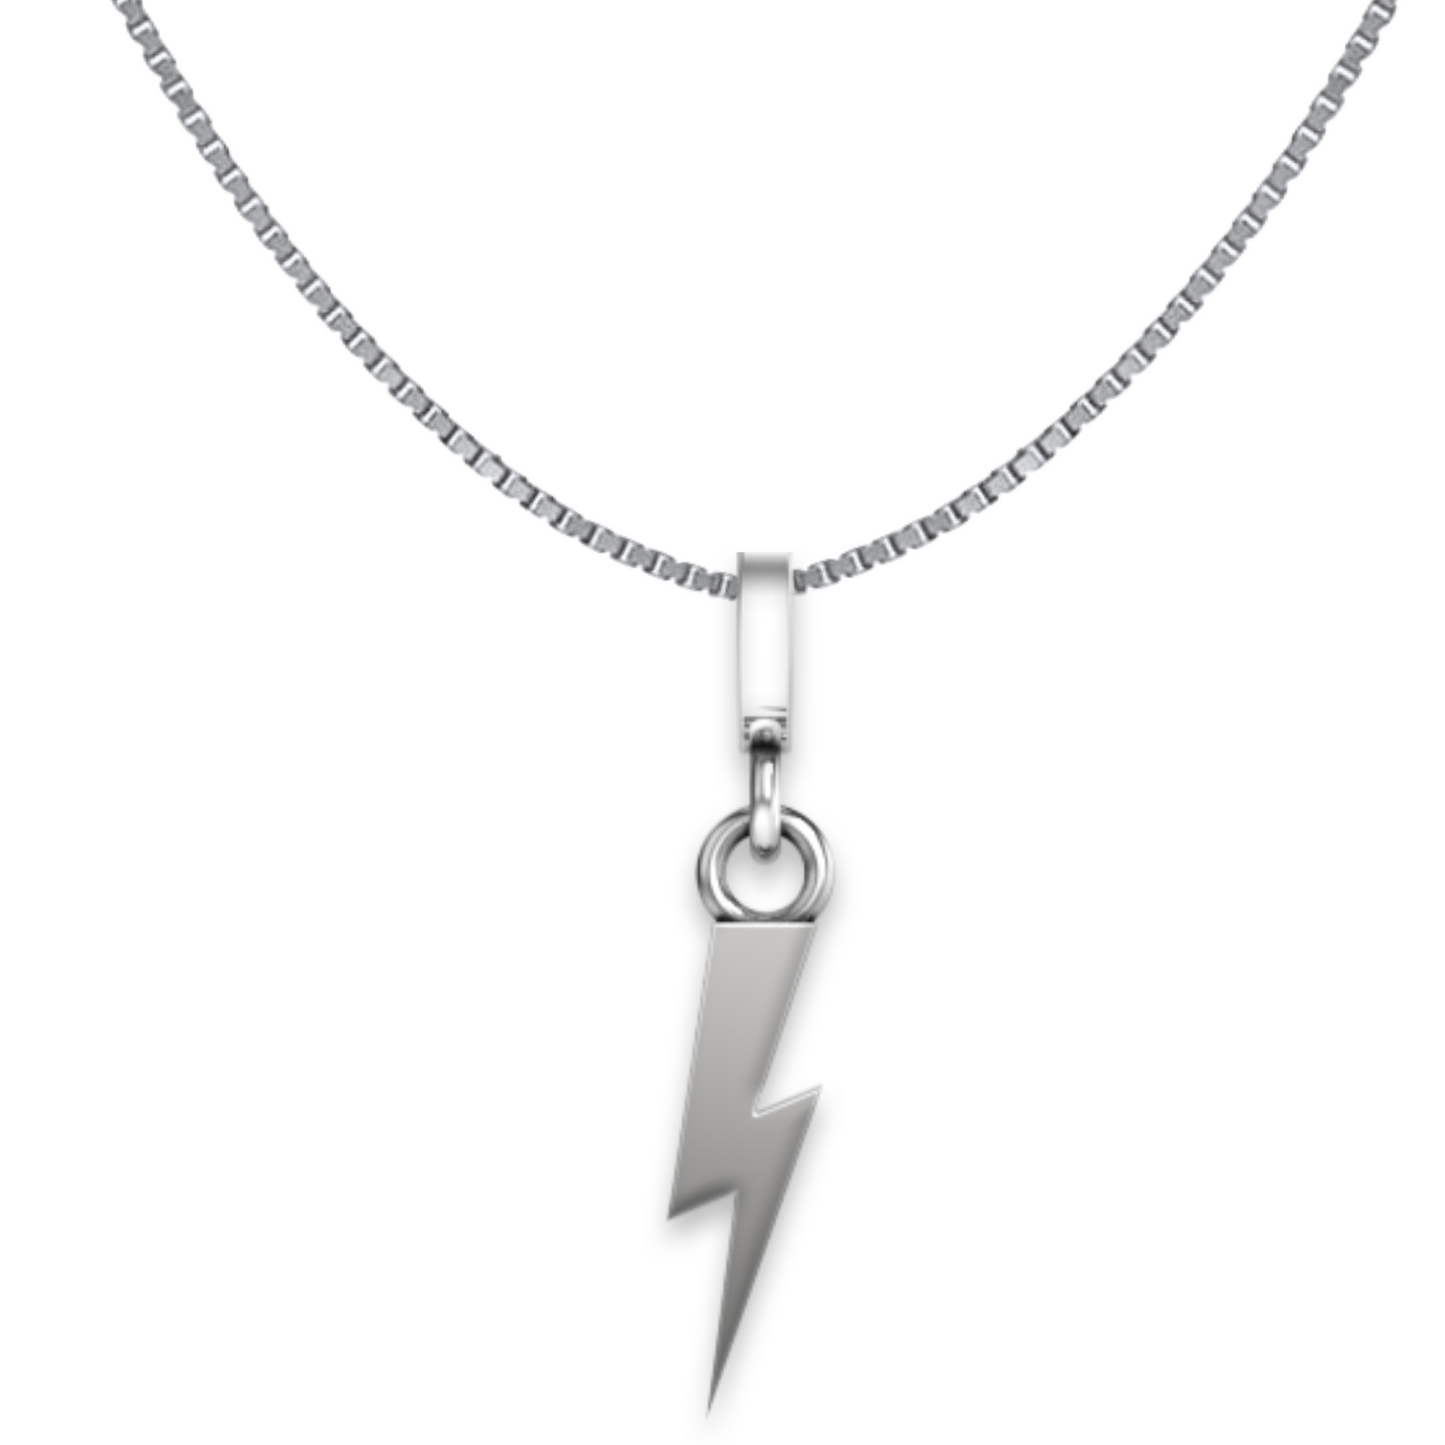 Lightening Bolt Pendant Necklace in 92.5 Silver